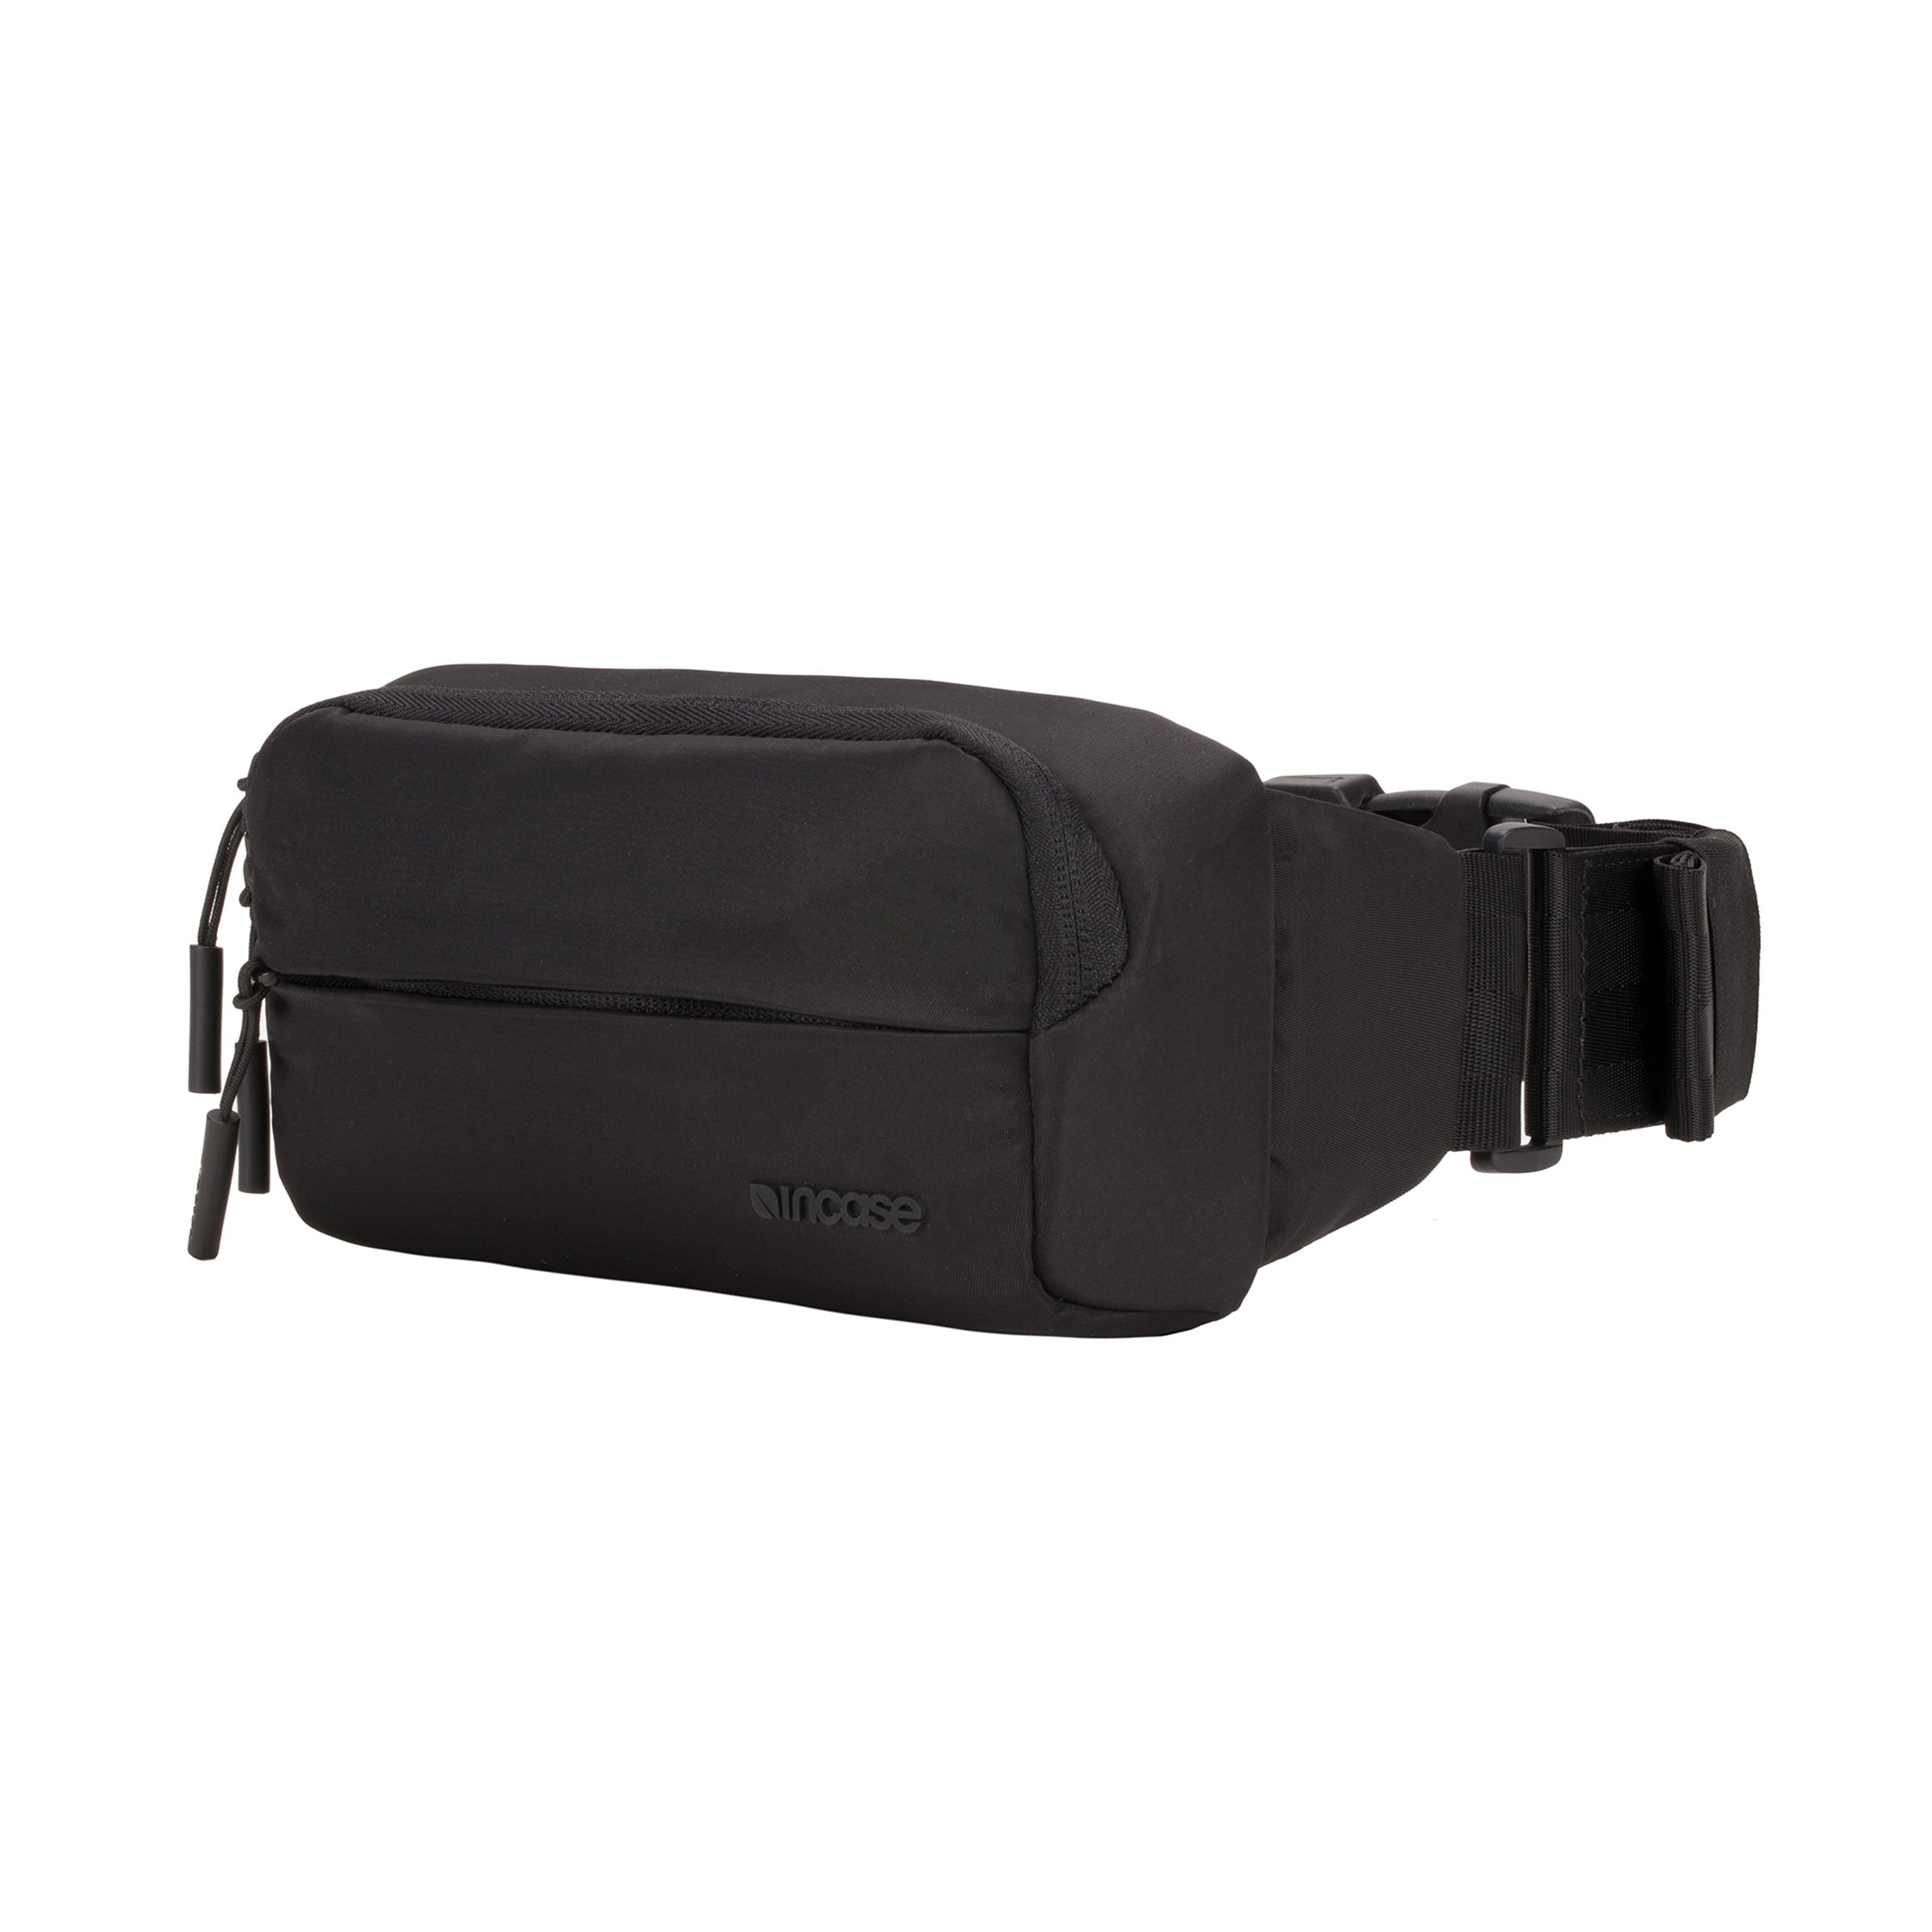 Incase: Side Bag - Black — TurntableLab.com